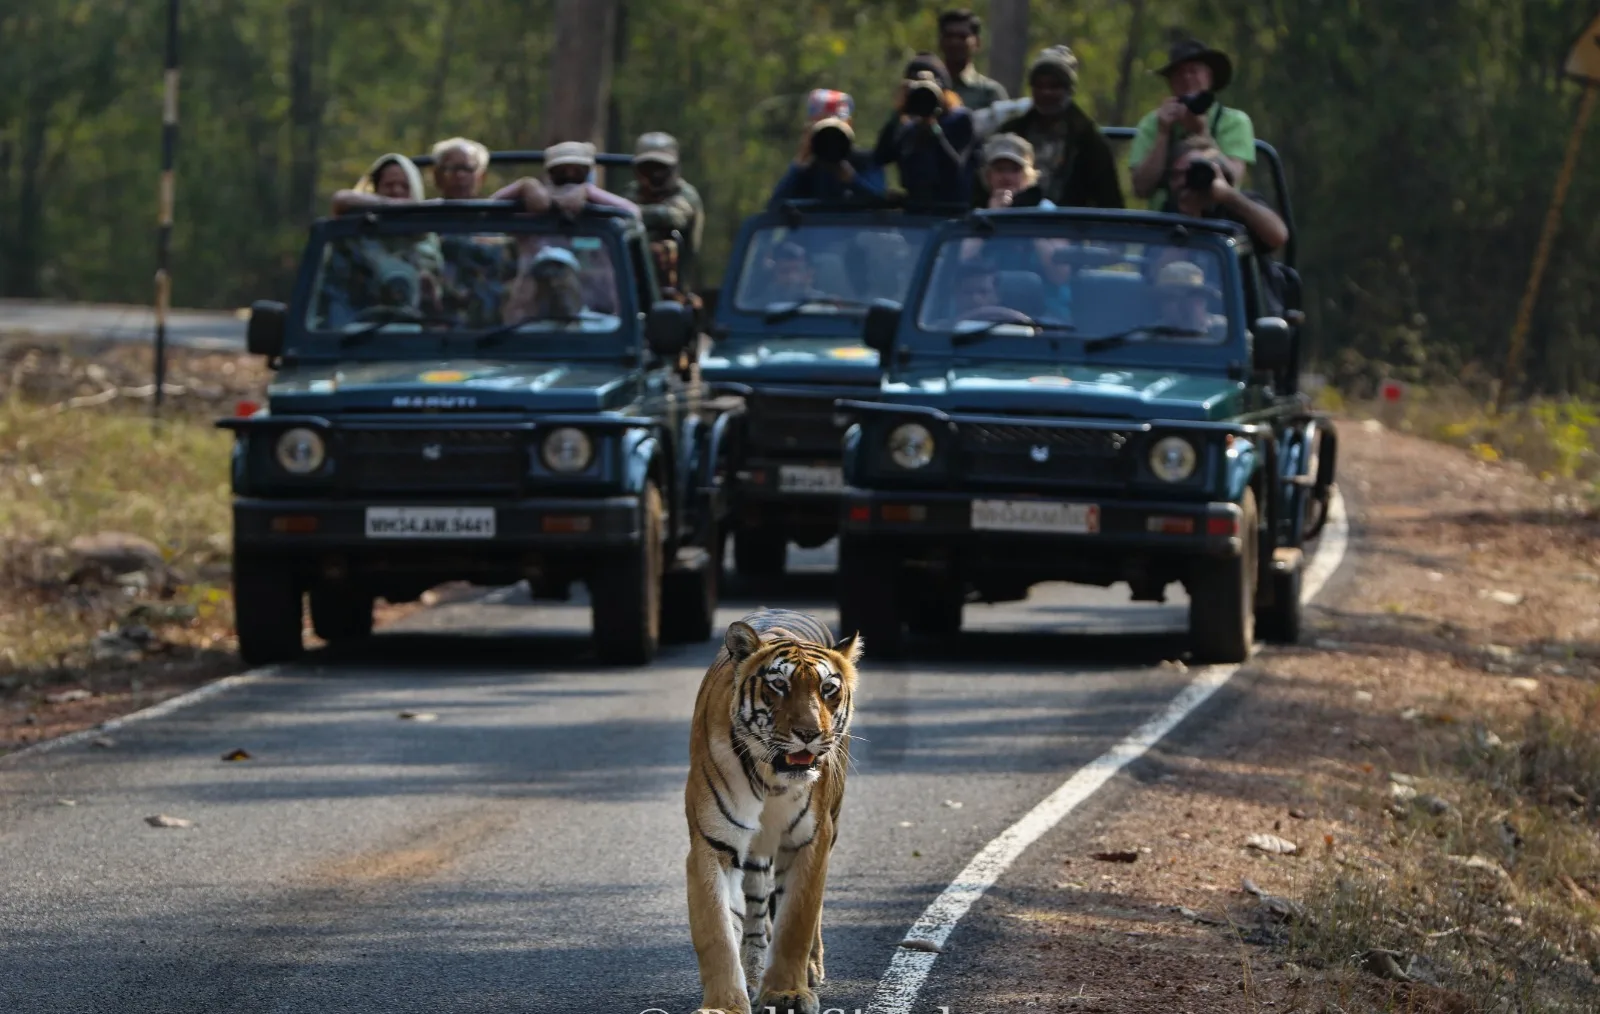 pench safari booking madhya pradesh